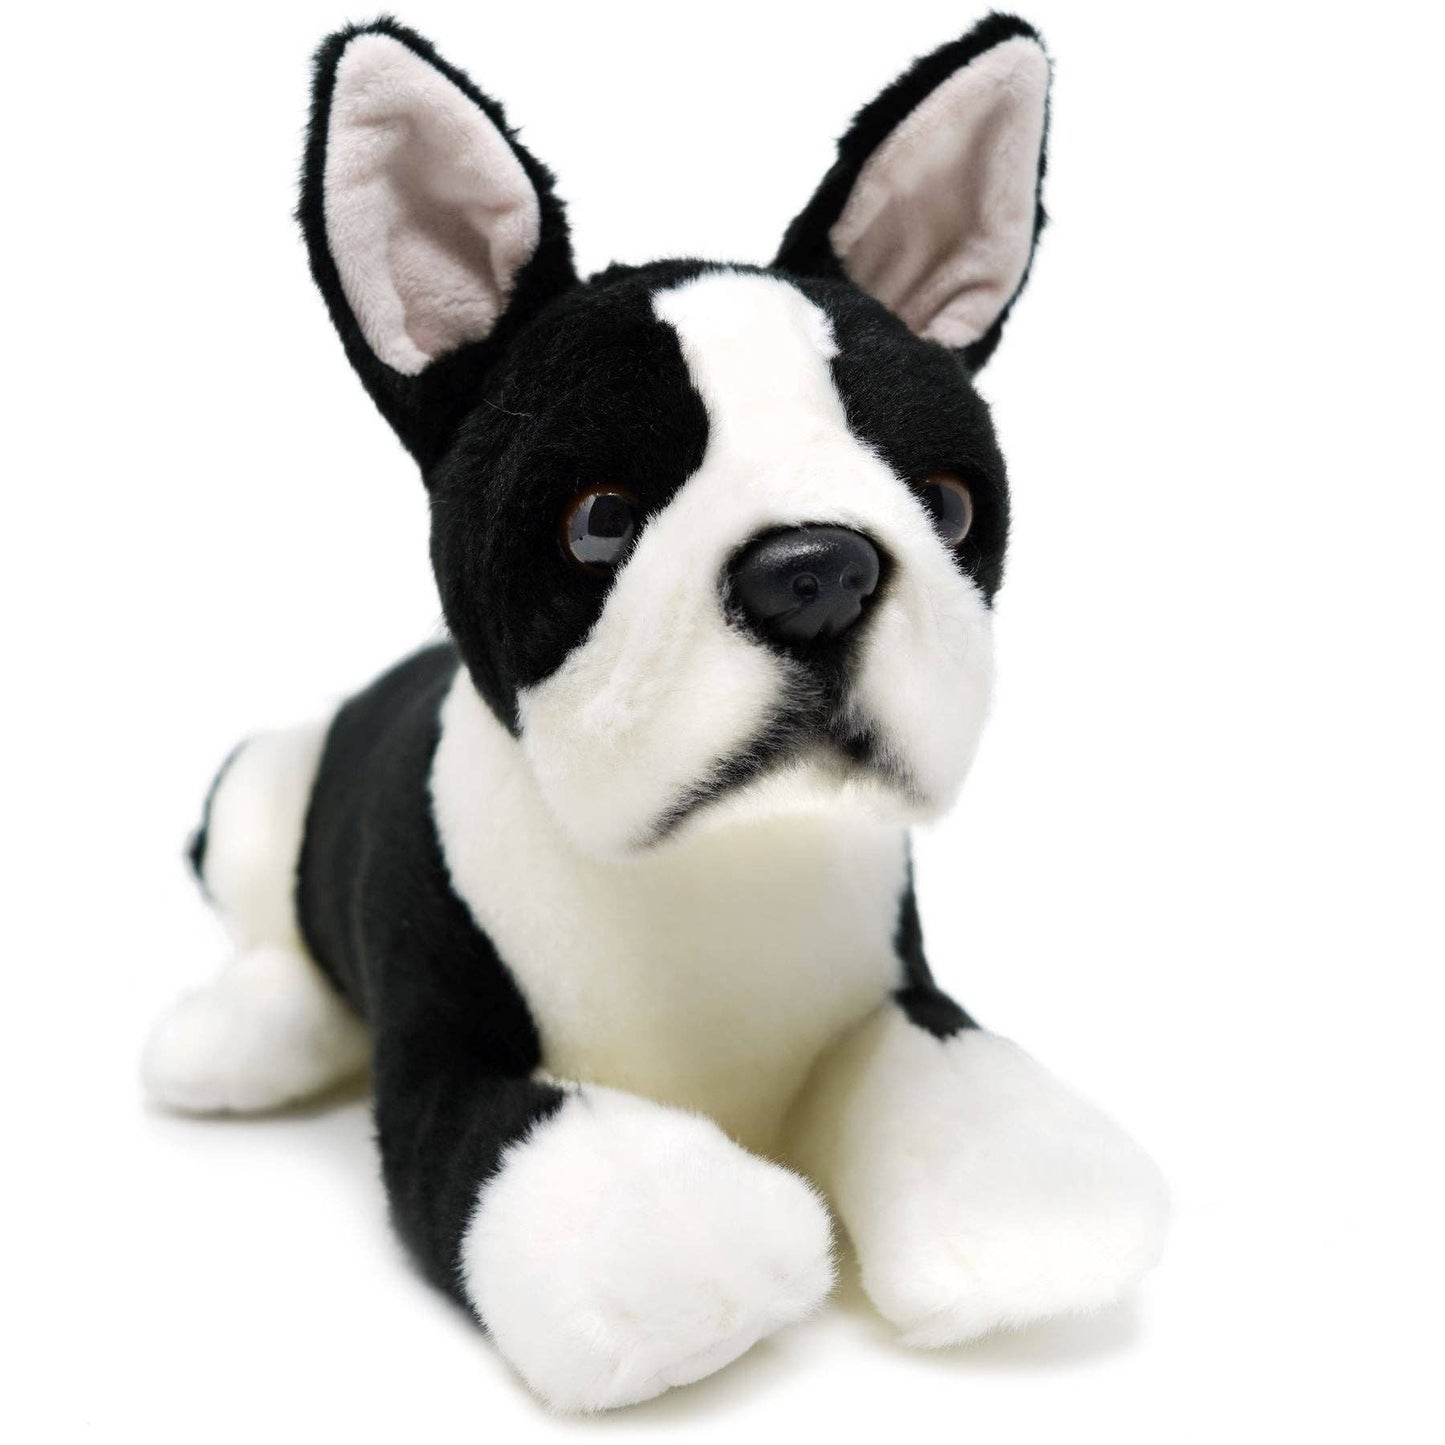 Baxter The Boston Terrier | 8 Inch Stuffed Animal Plush